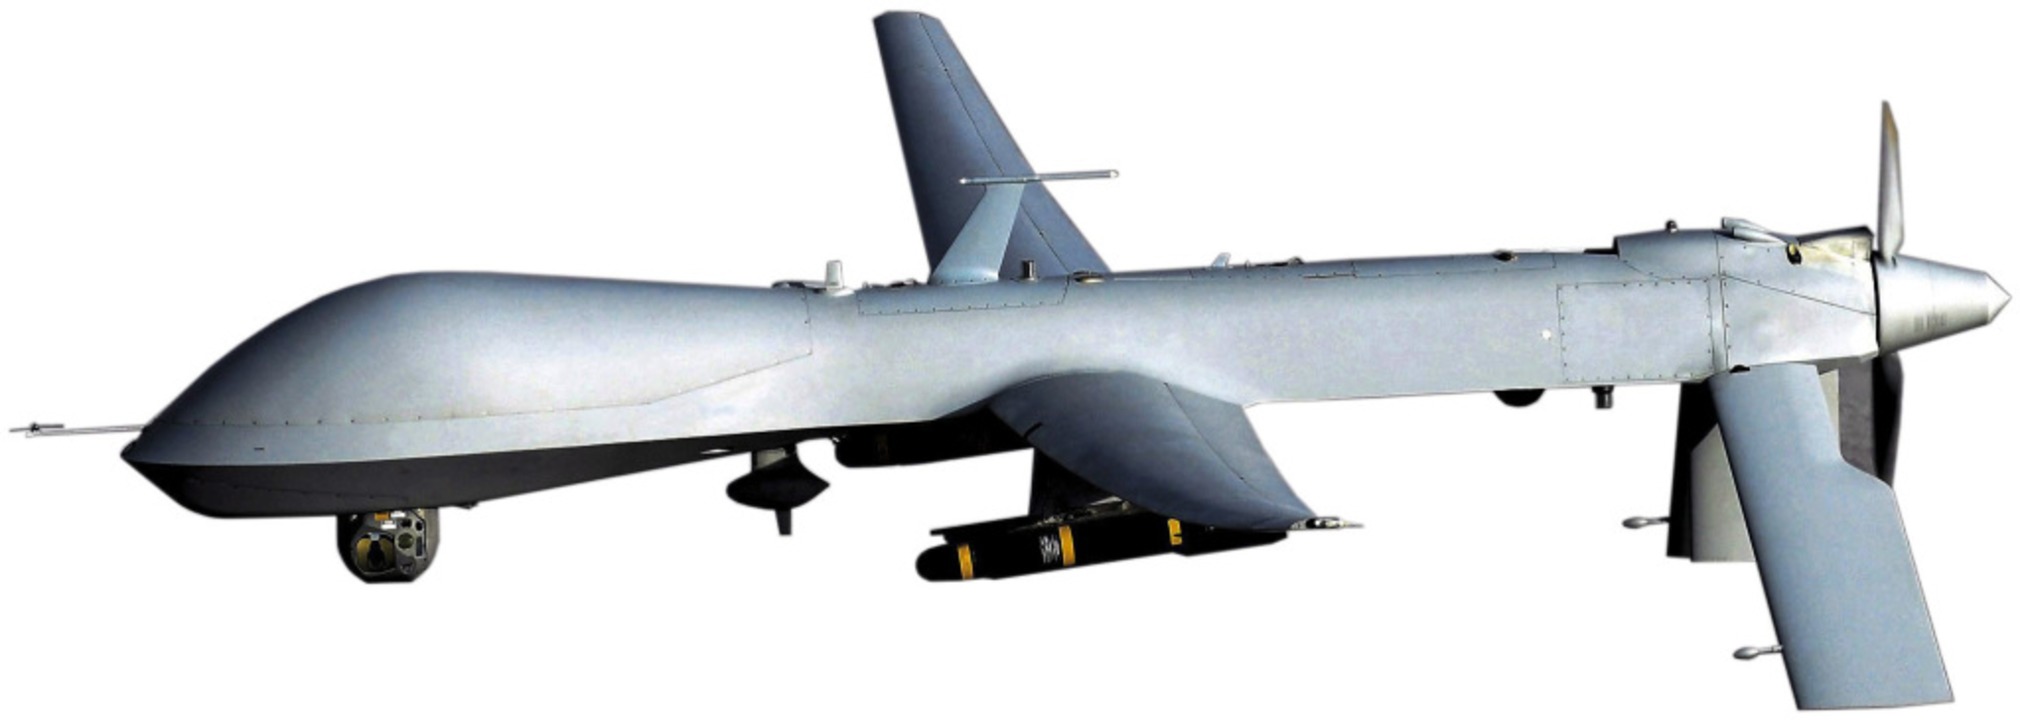 Drohne vom Typ MQ-1 Predator  | Foto: US Air Force